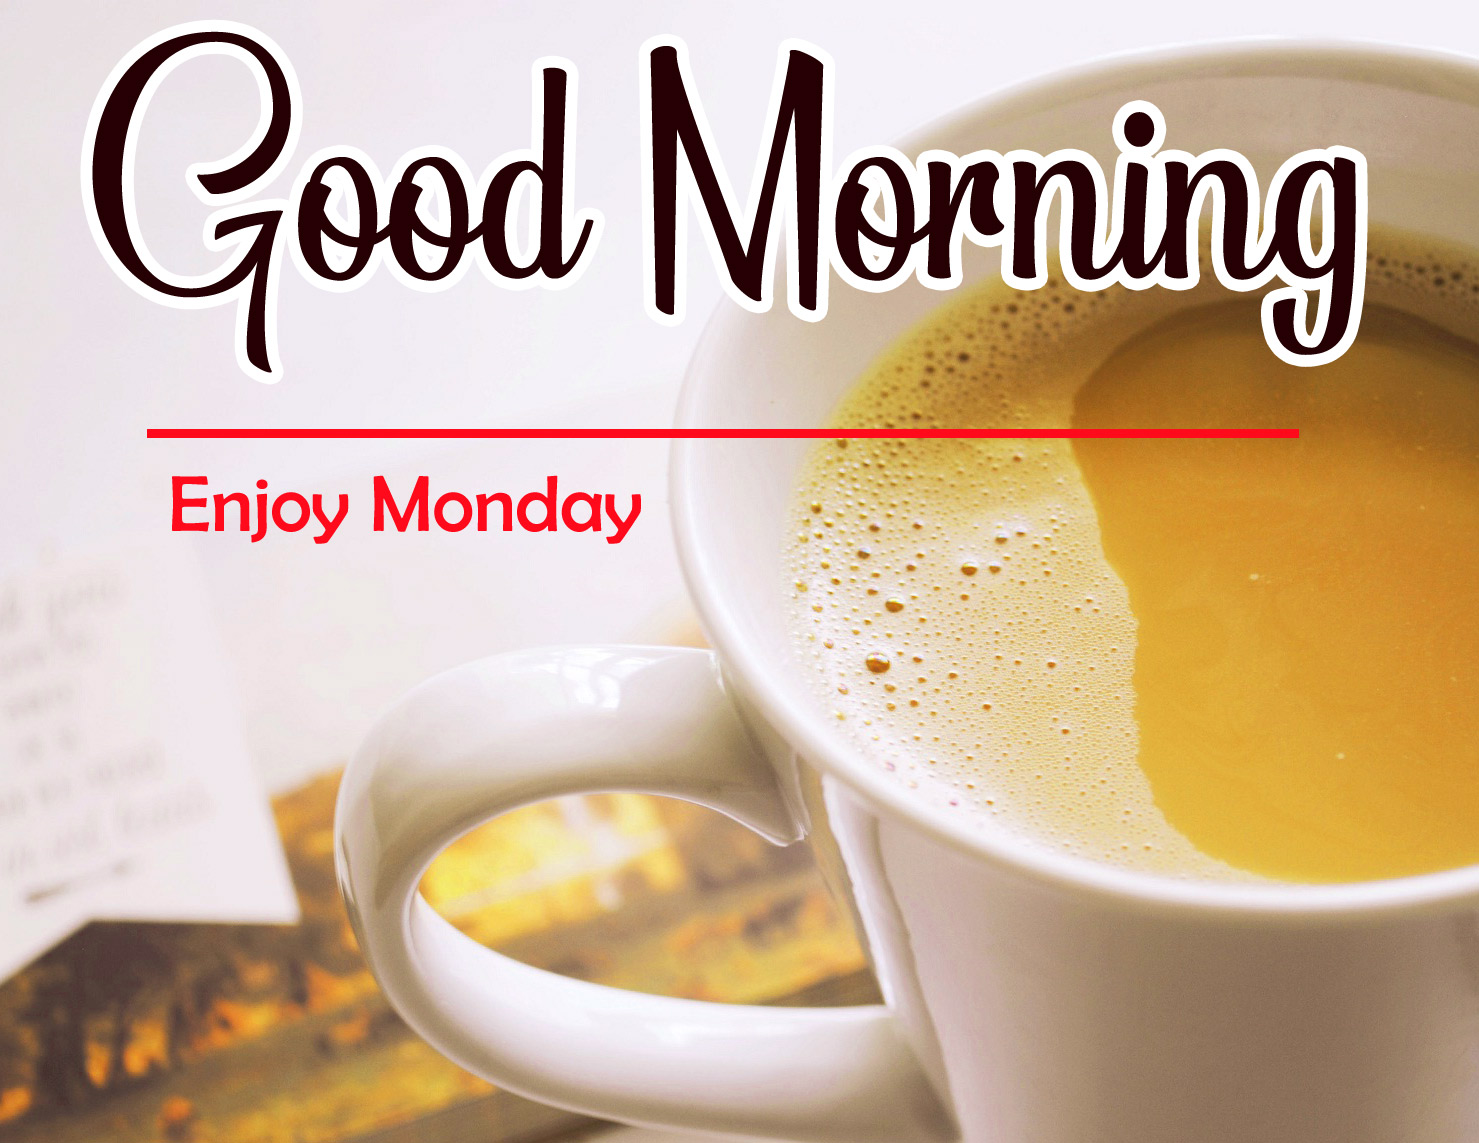 Good Morning Tea Cup Wallpaper Download 